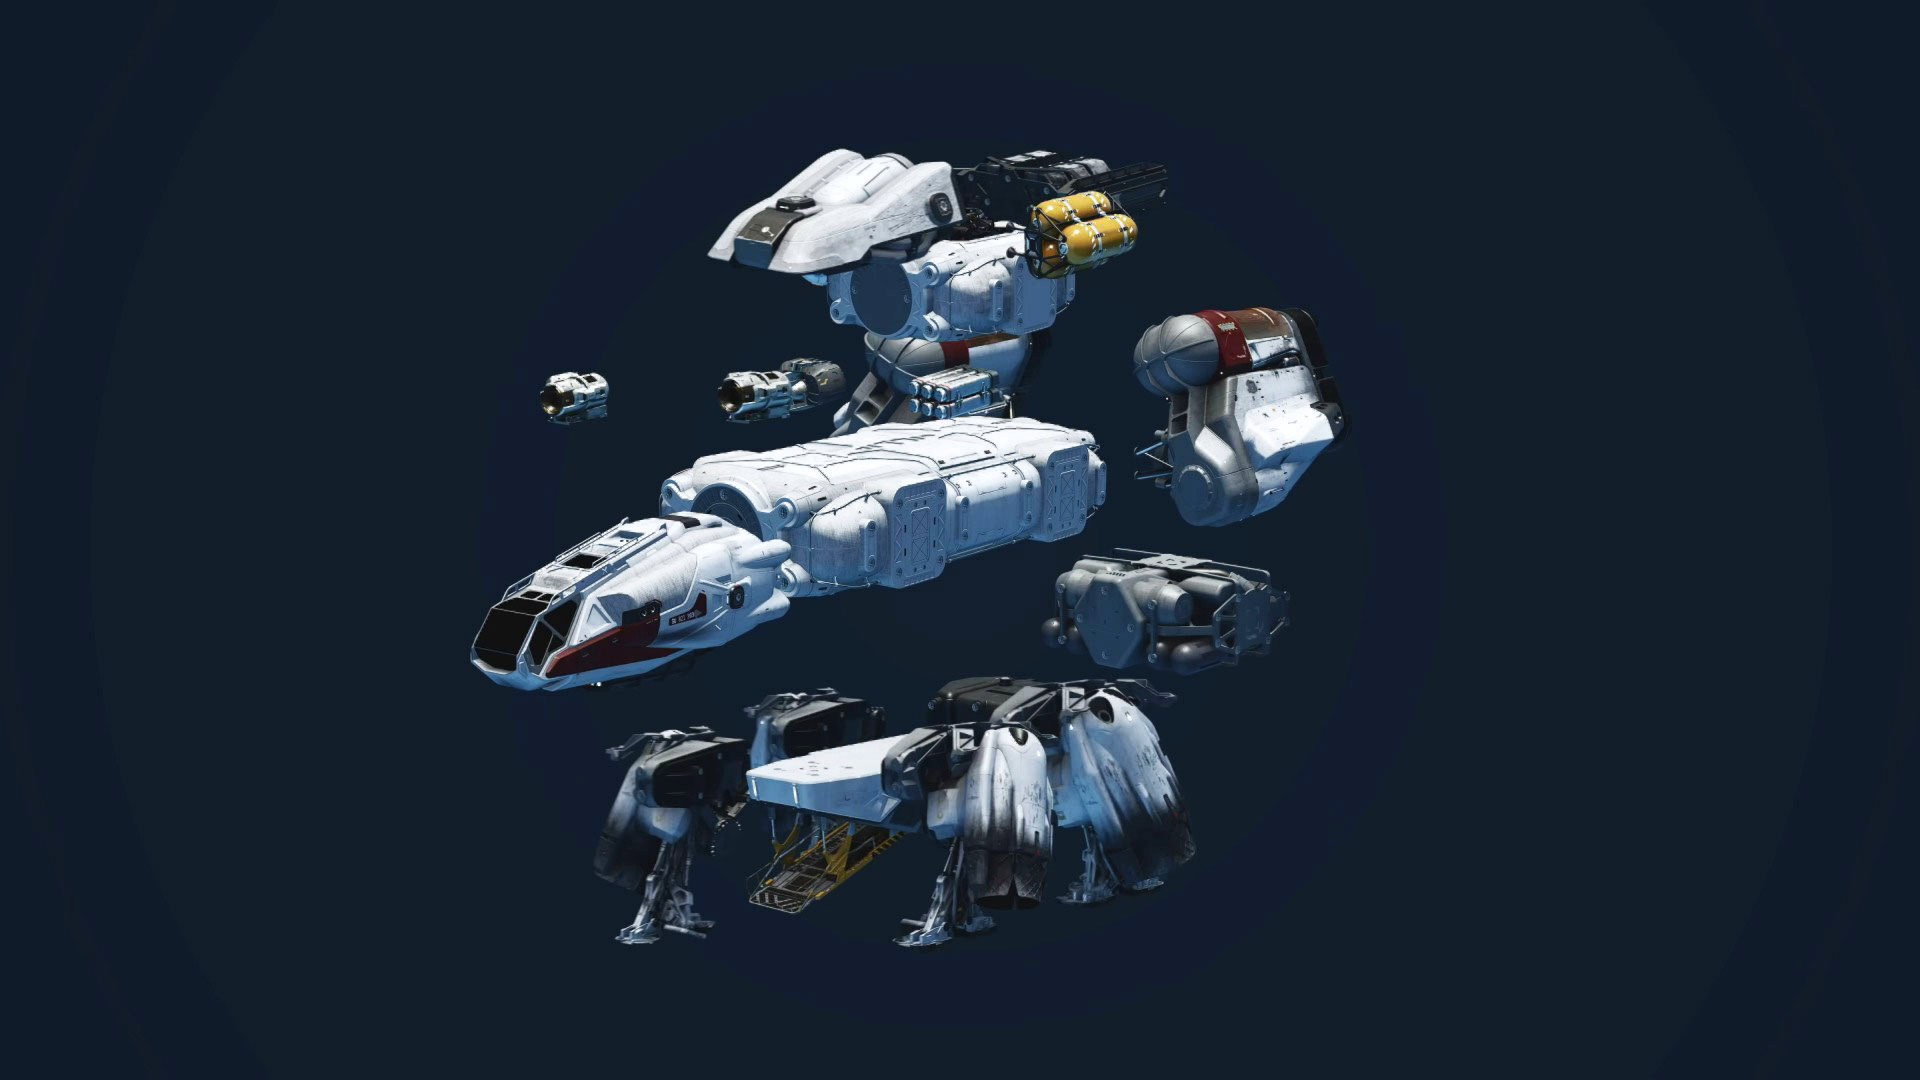 space warship - Google Search  Space ship concept art, Space fleet,  Concept ships